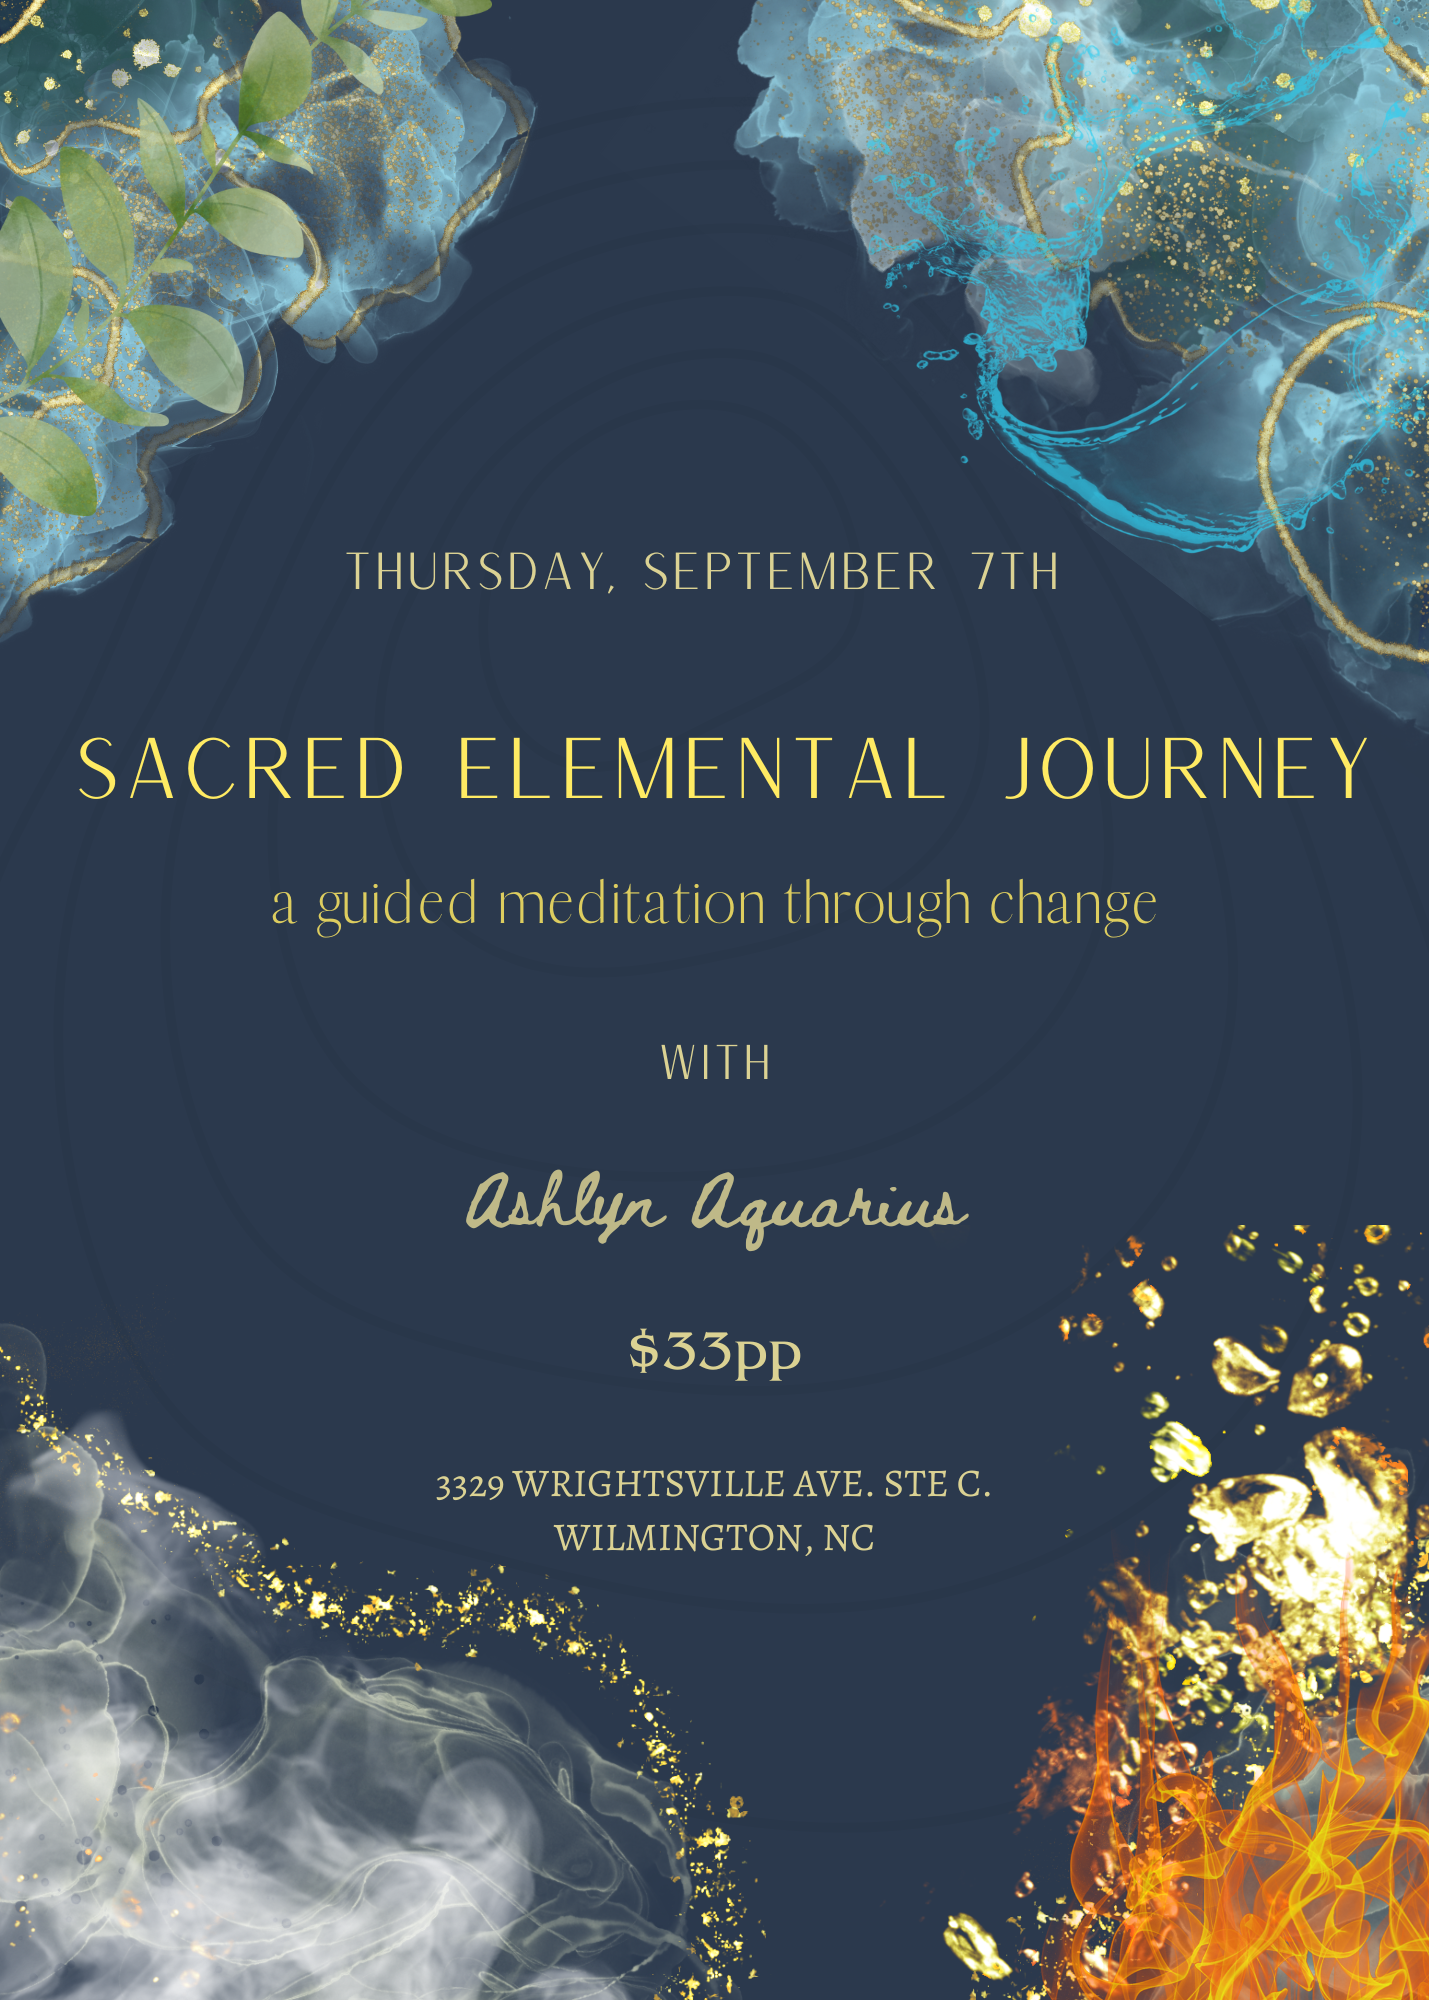 Sacred Elemental Journey with Ashlyn Aquarius